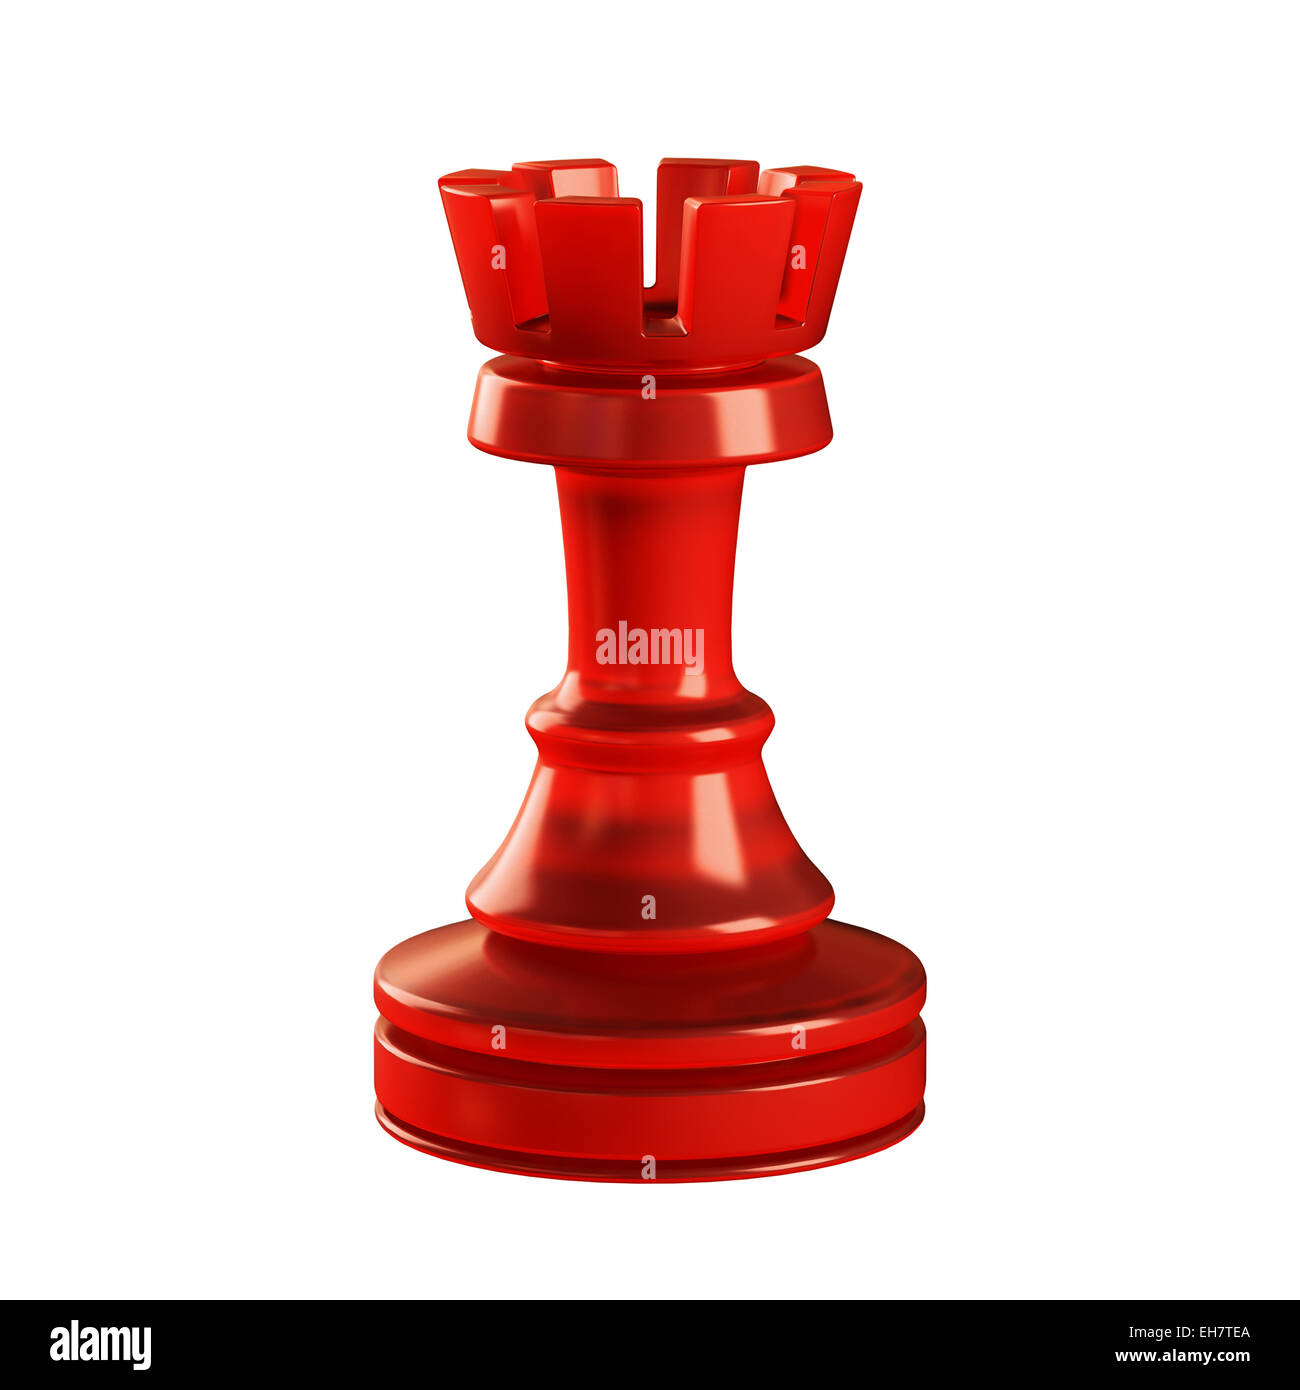 Rook chess piece, illustration Stock Photo - Alamy